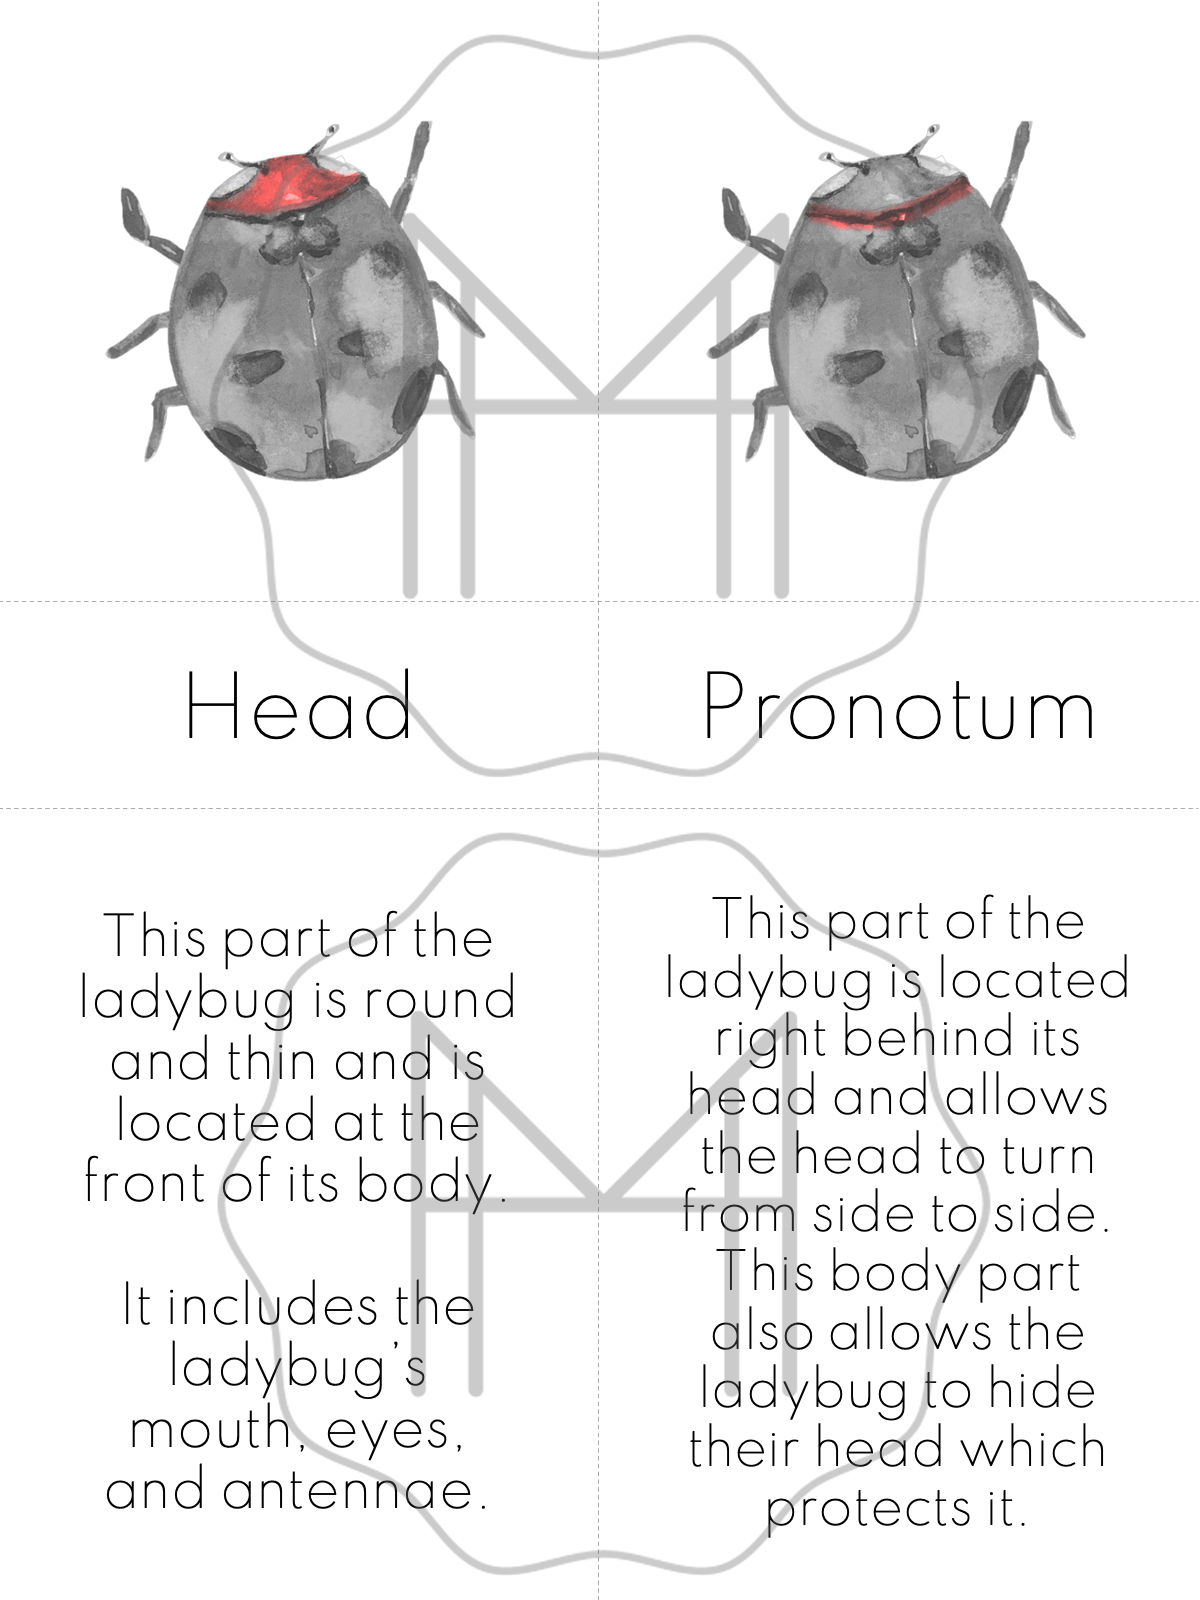 Advanced Study of the Ladybug- Parts of the Ladybug/Life Cycle of the Ladybug